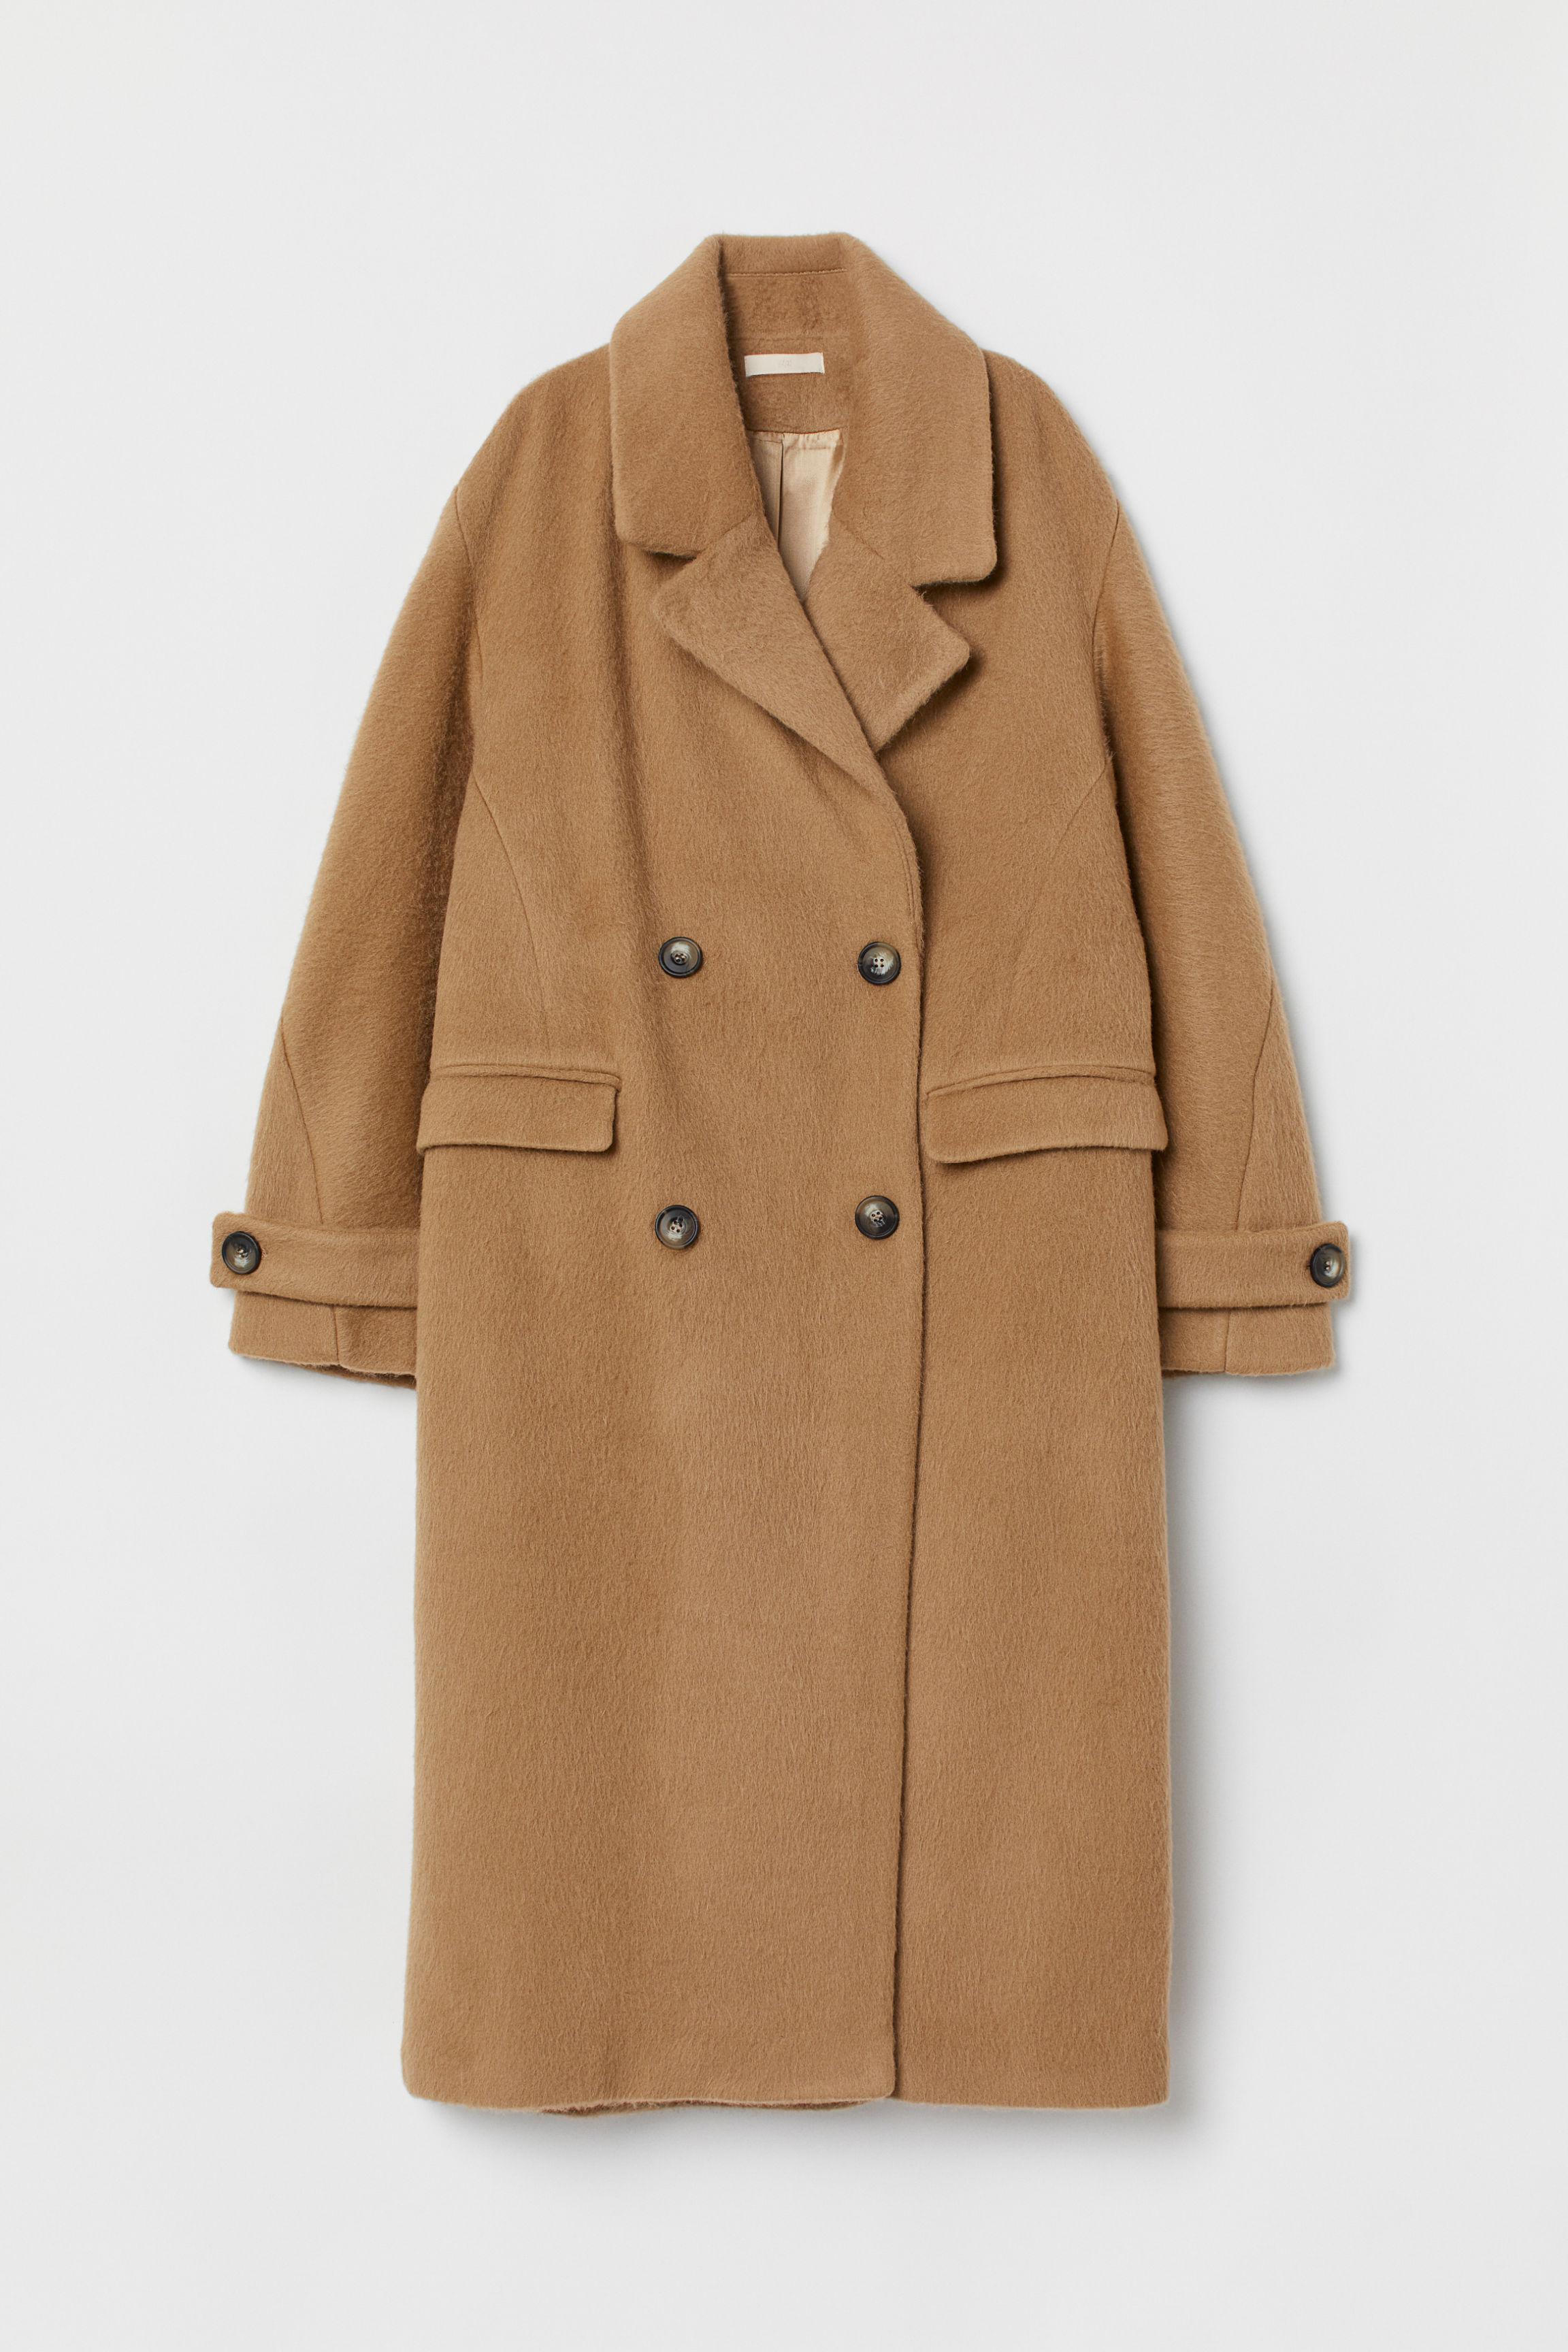 H&M Wool-blend Coat in Beige (Natural) | Lyst